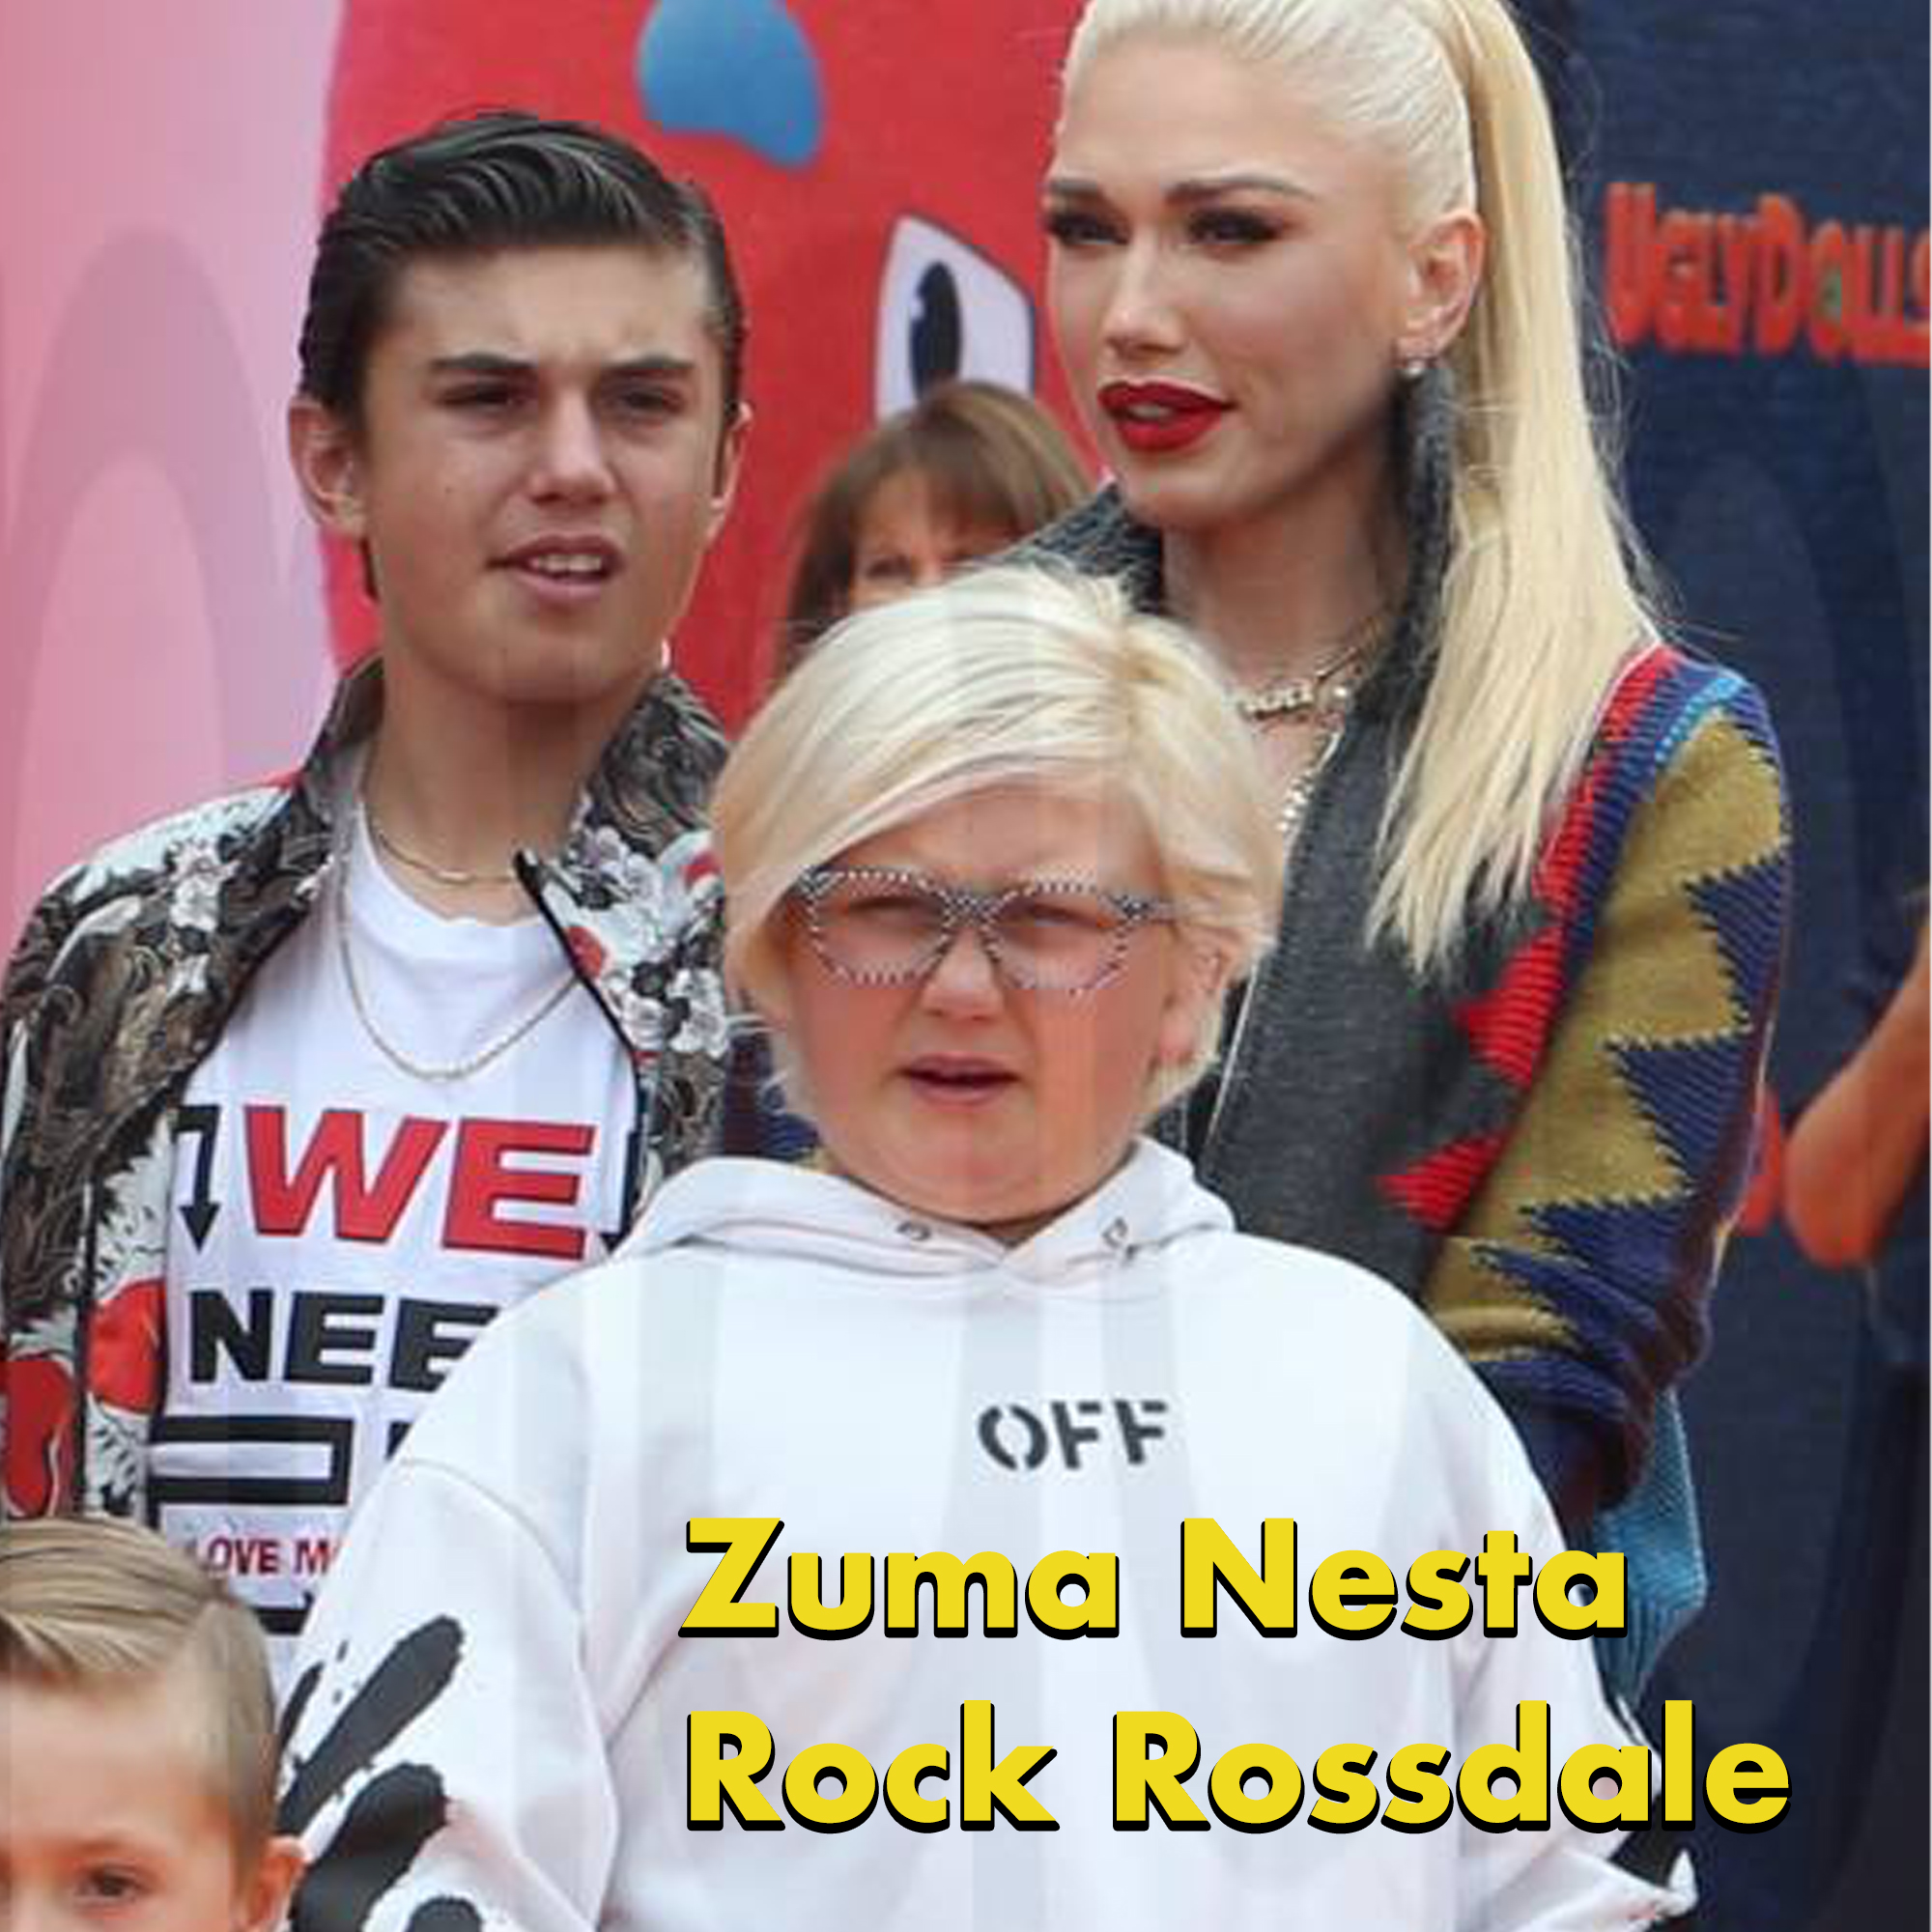 Terrible celeb baby names -hairstyle - CerDAN Iwe Nee Off Love M Zuma Nesta Rock Rossdale